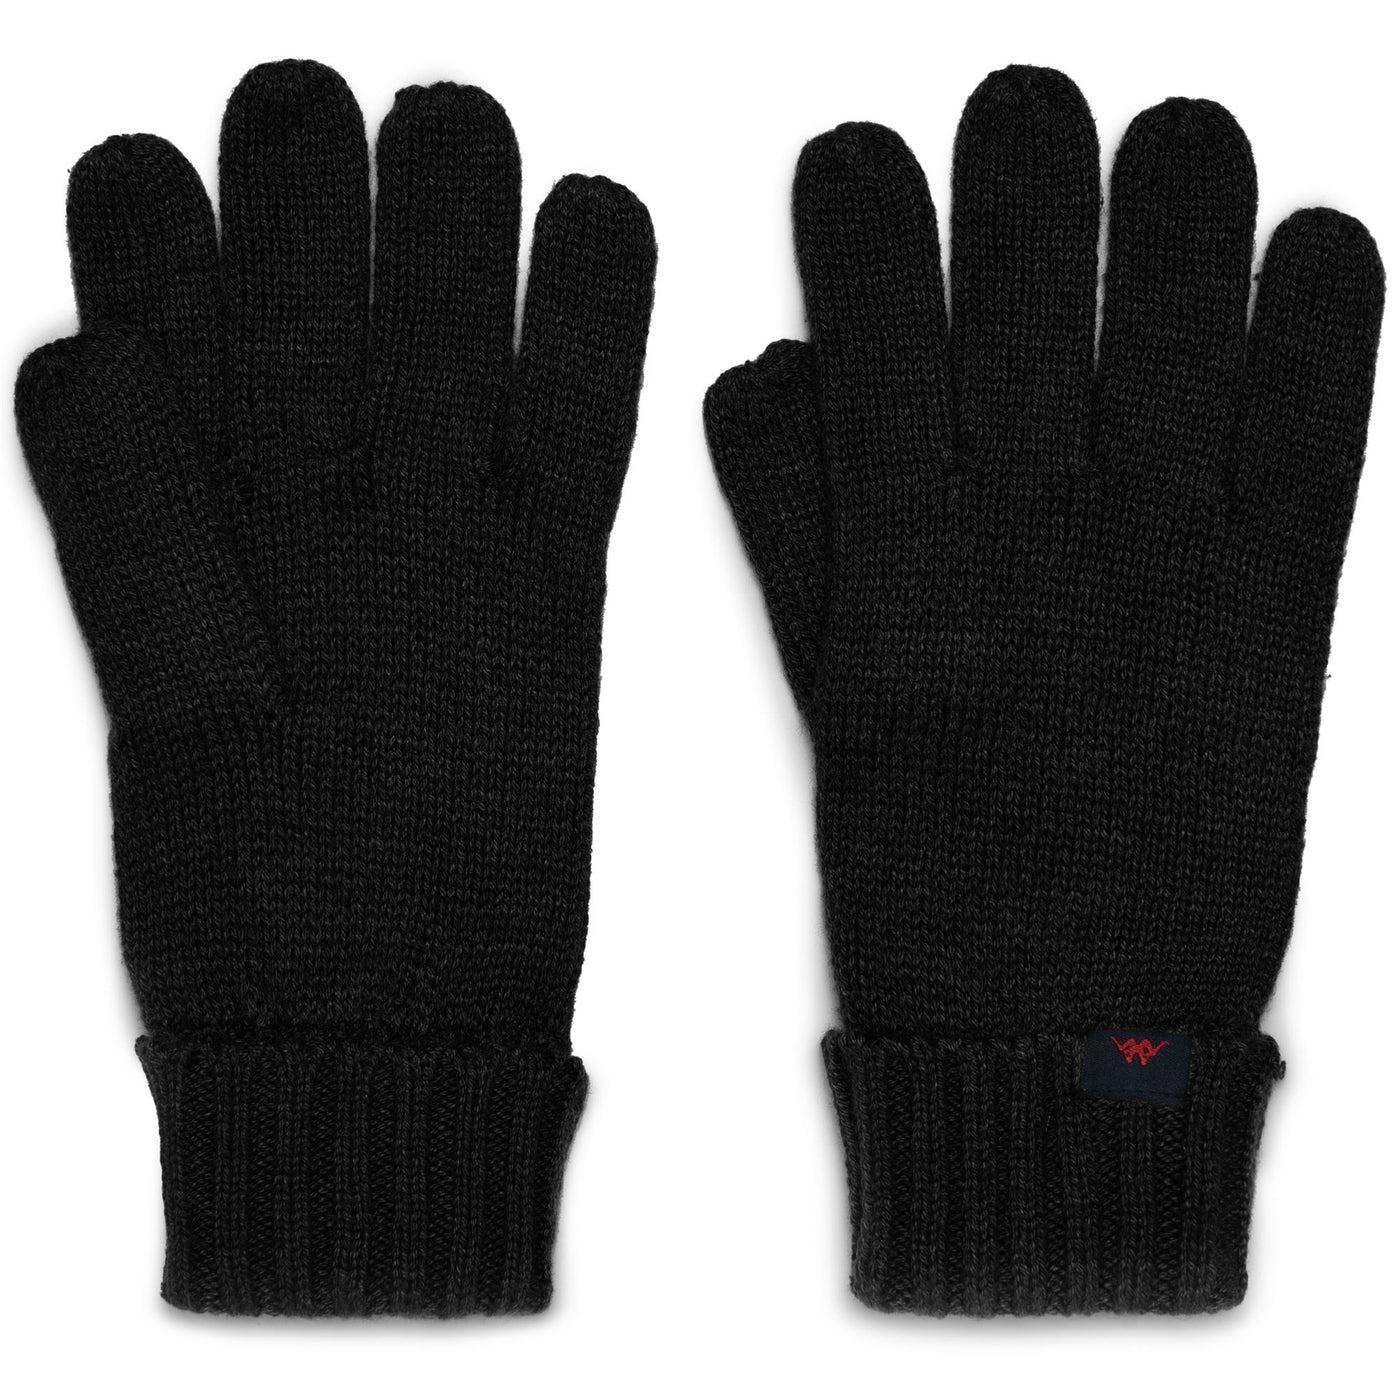 Gloves Woman EMELI Glove Black | robedikappa Photo (jpg Rgb)			